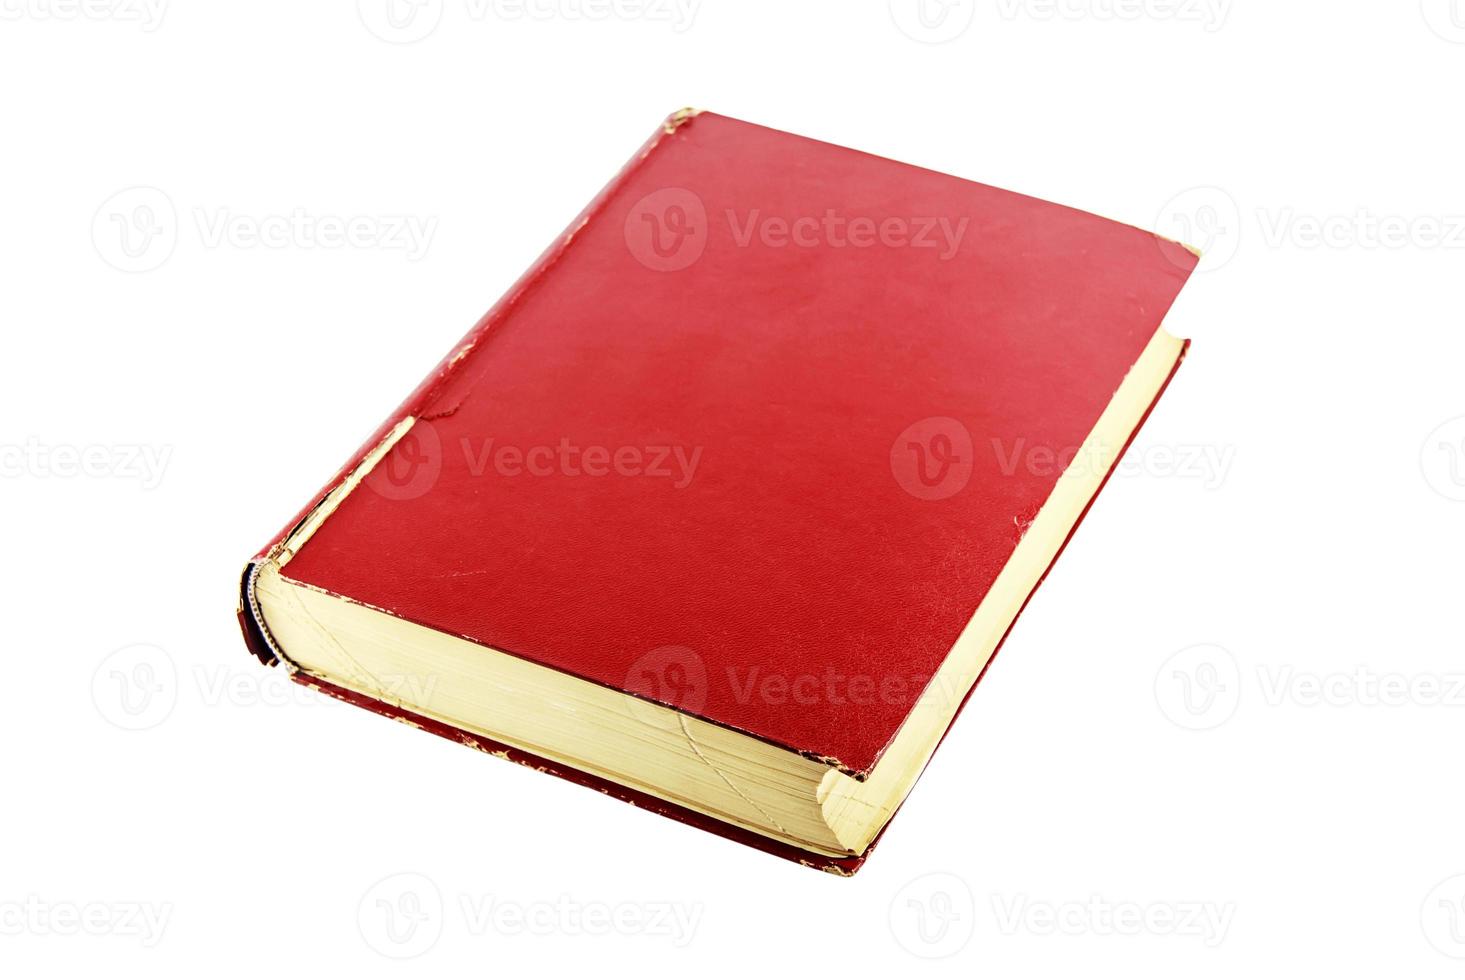 viejo libro rojo aislado en blanco foto